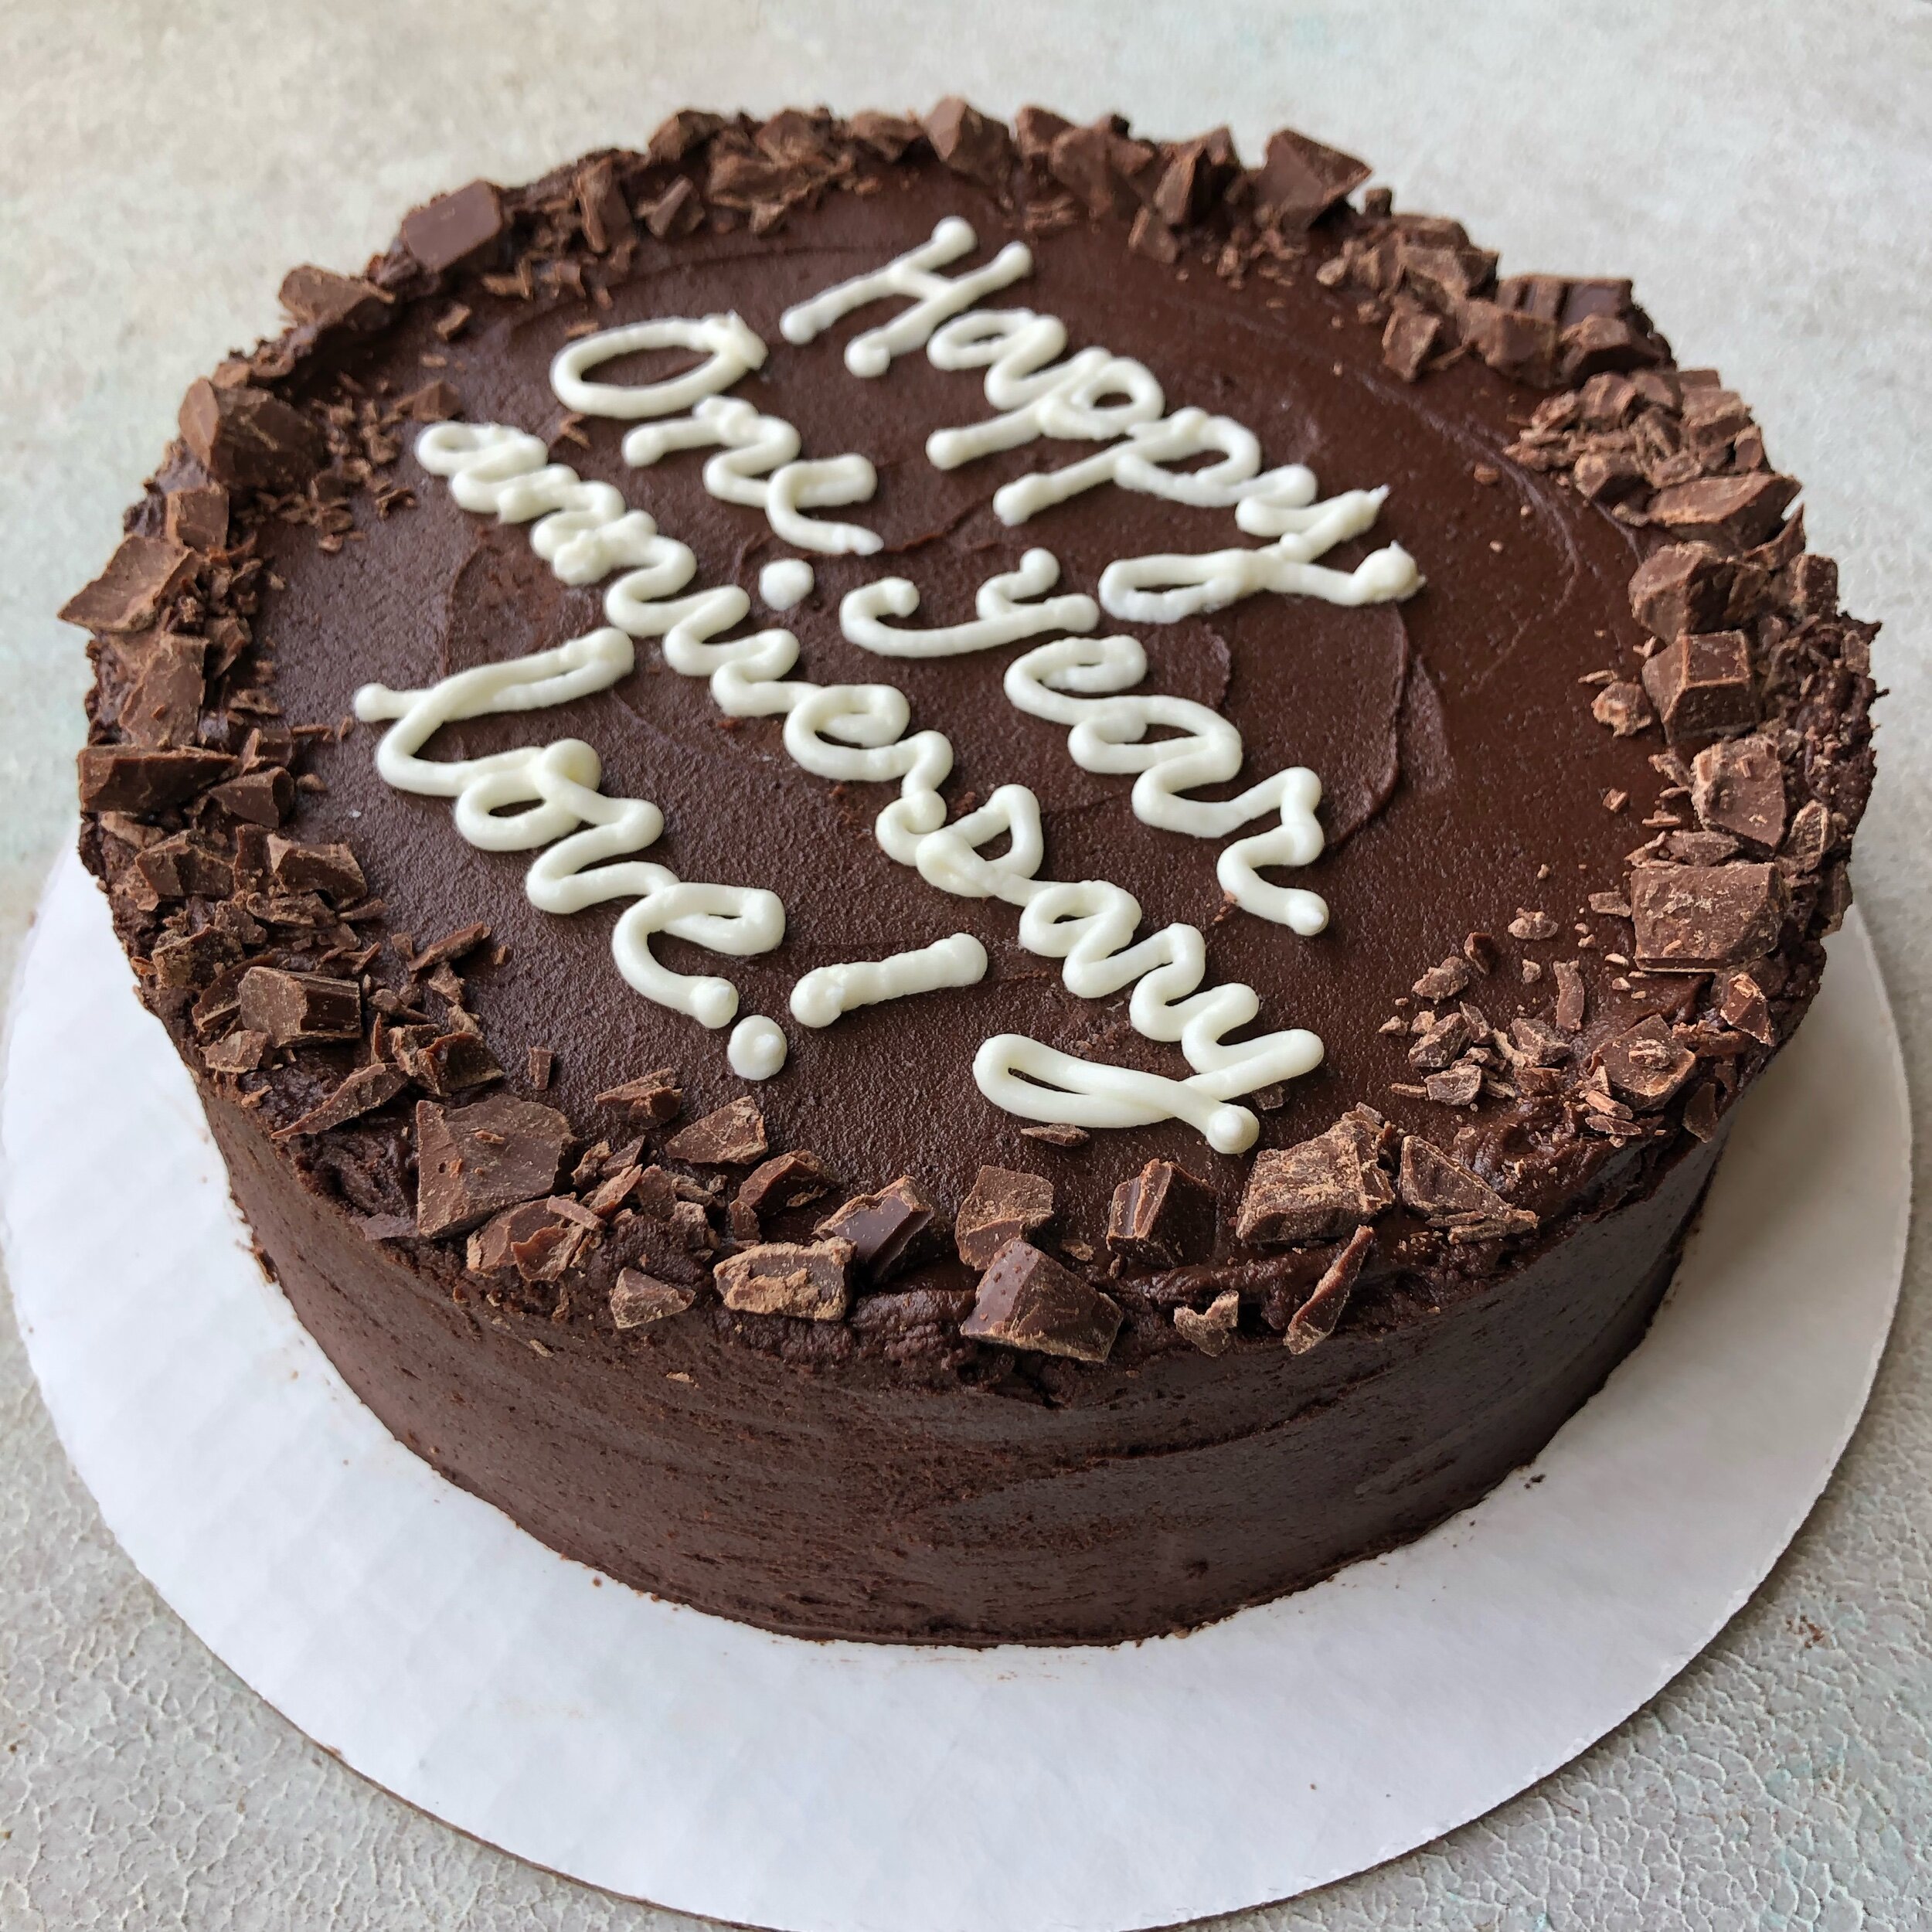  Chocolate Cake with chocolate chunks 